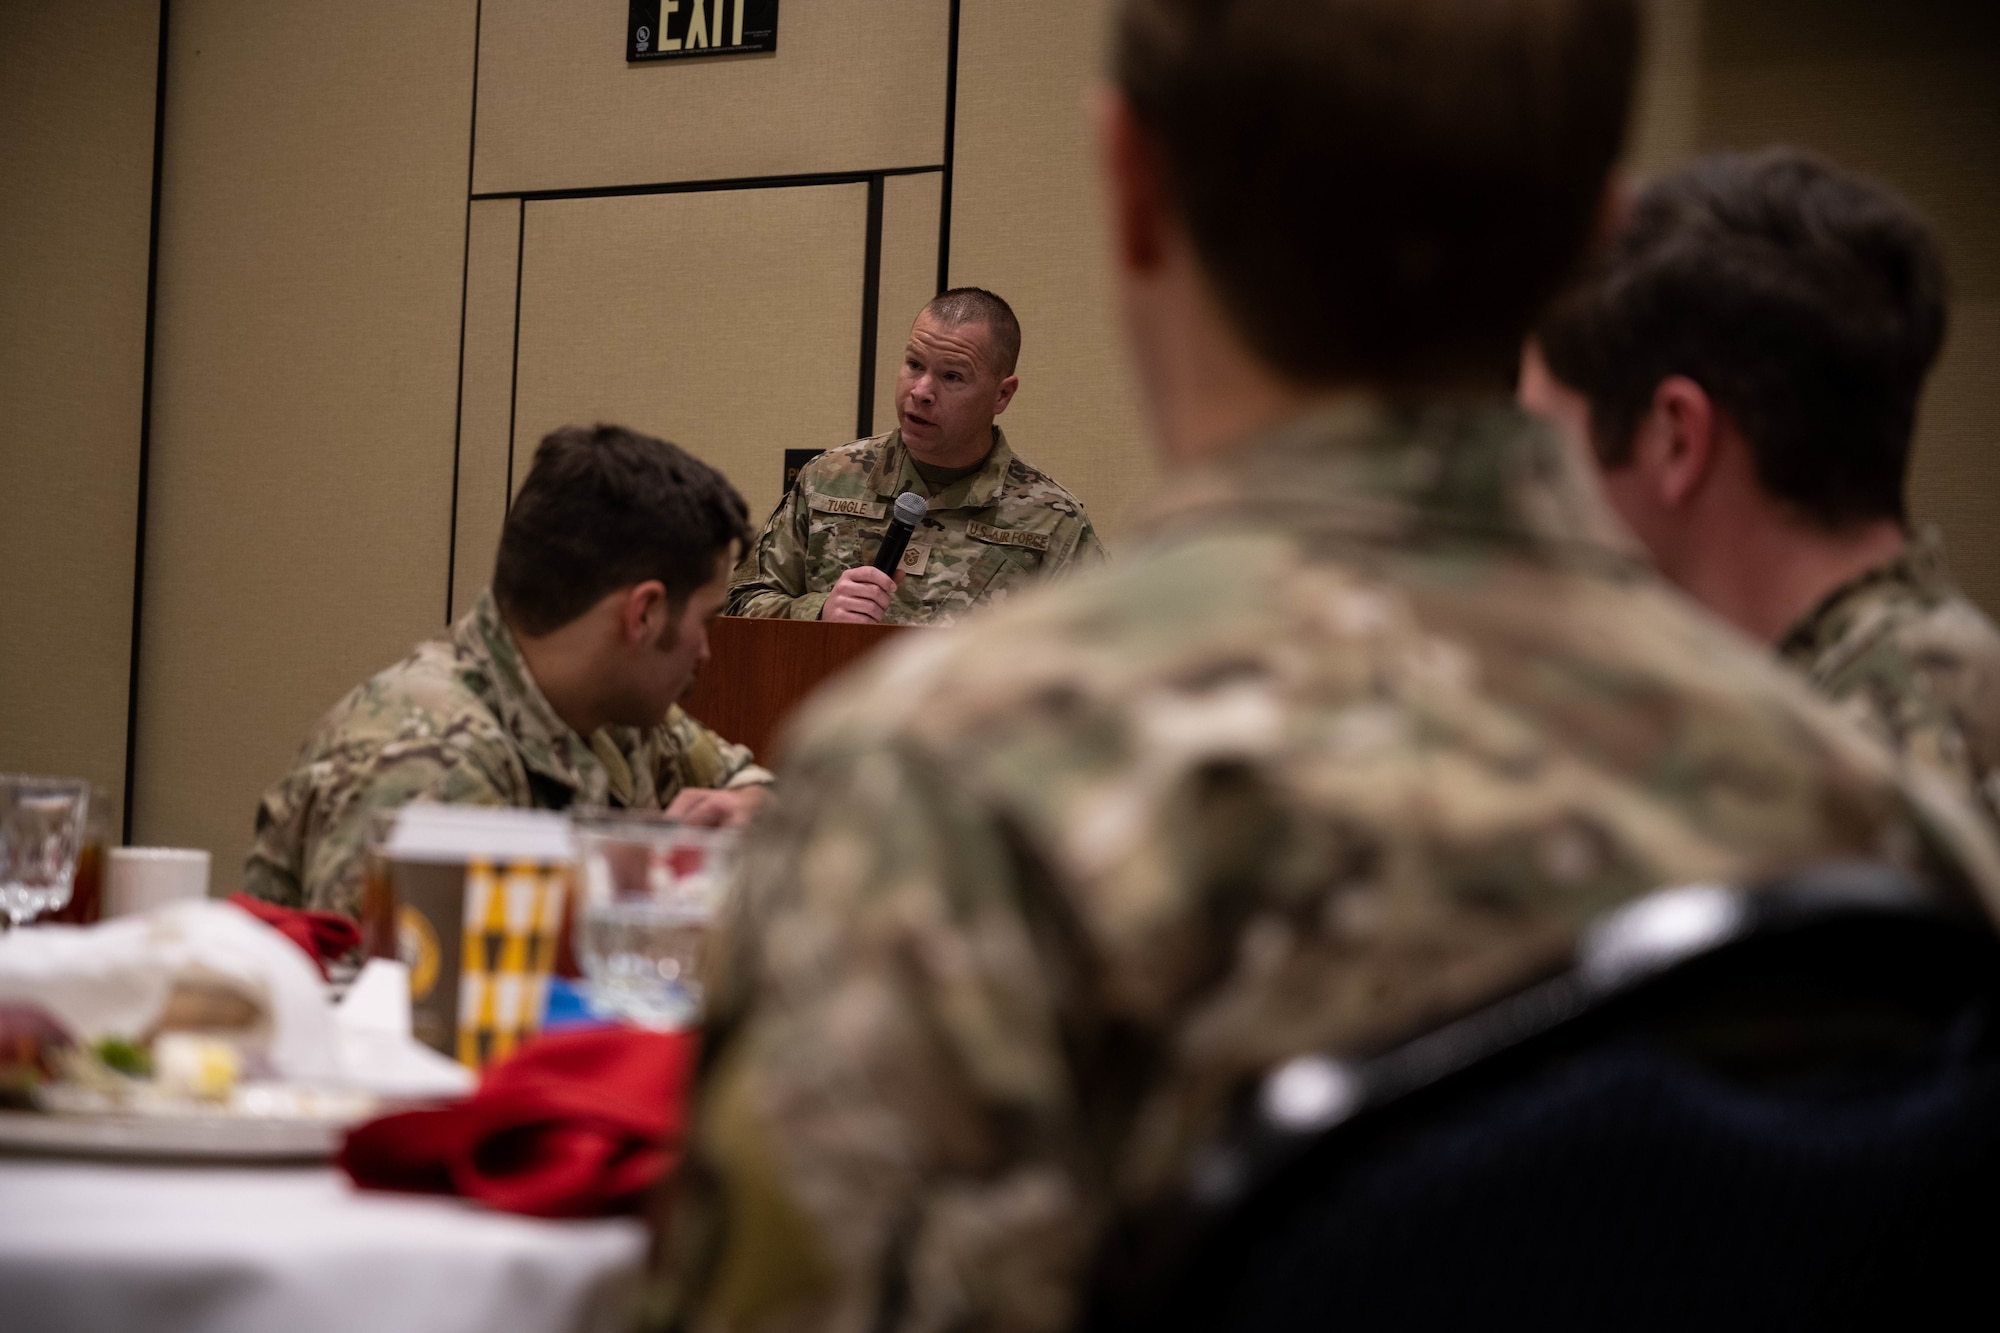 U.S. Air Force member speaks at ceremony